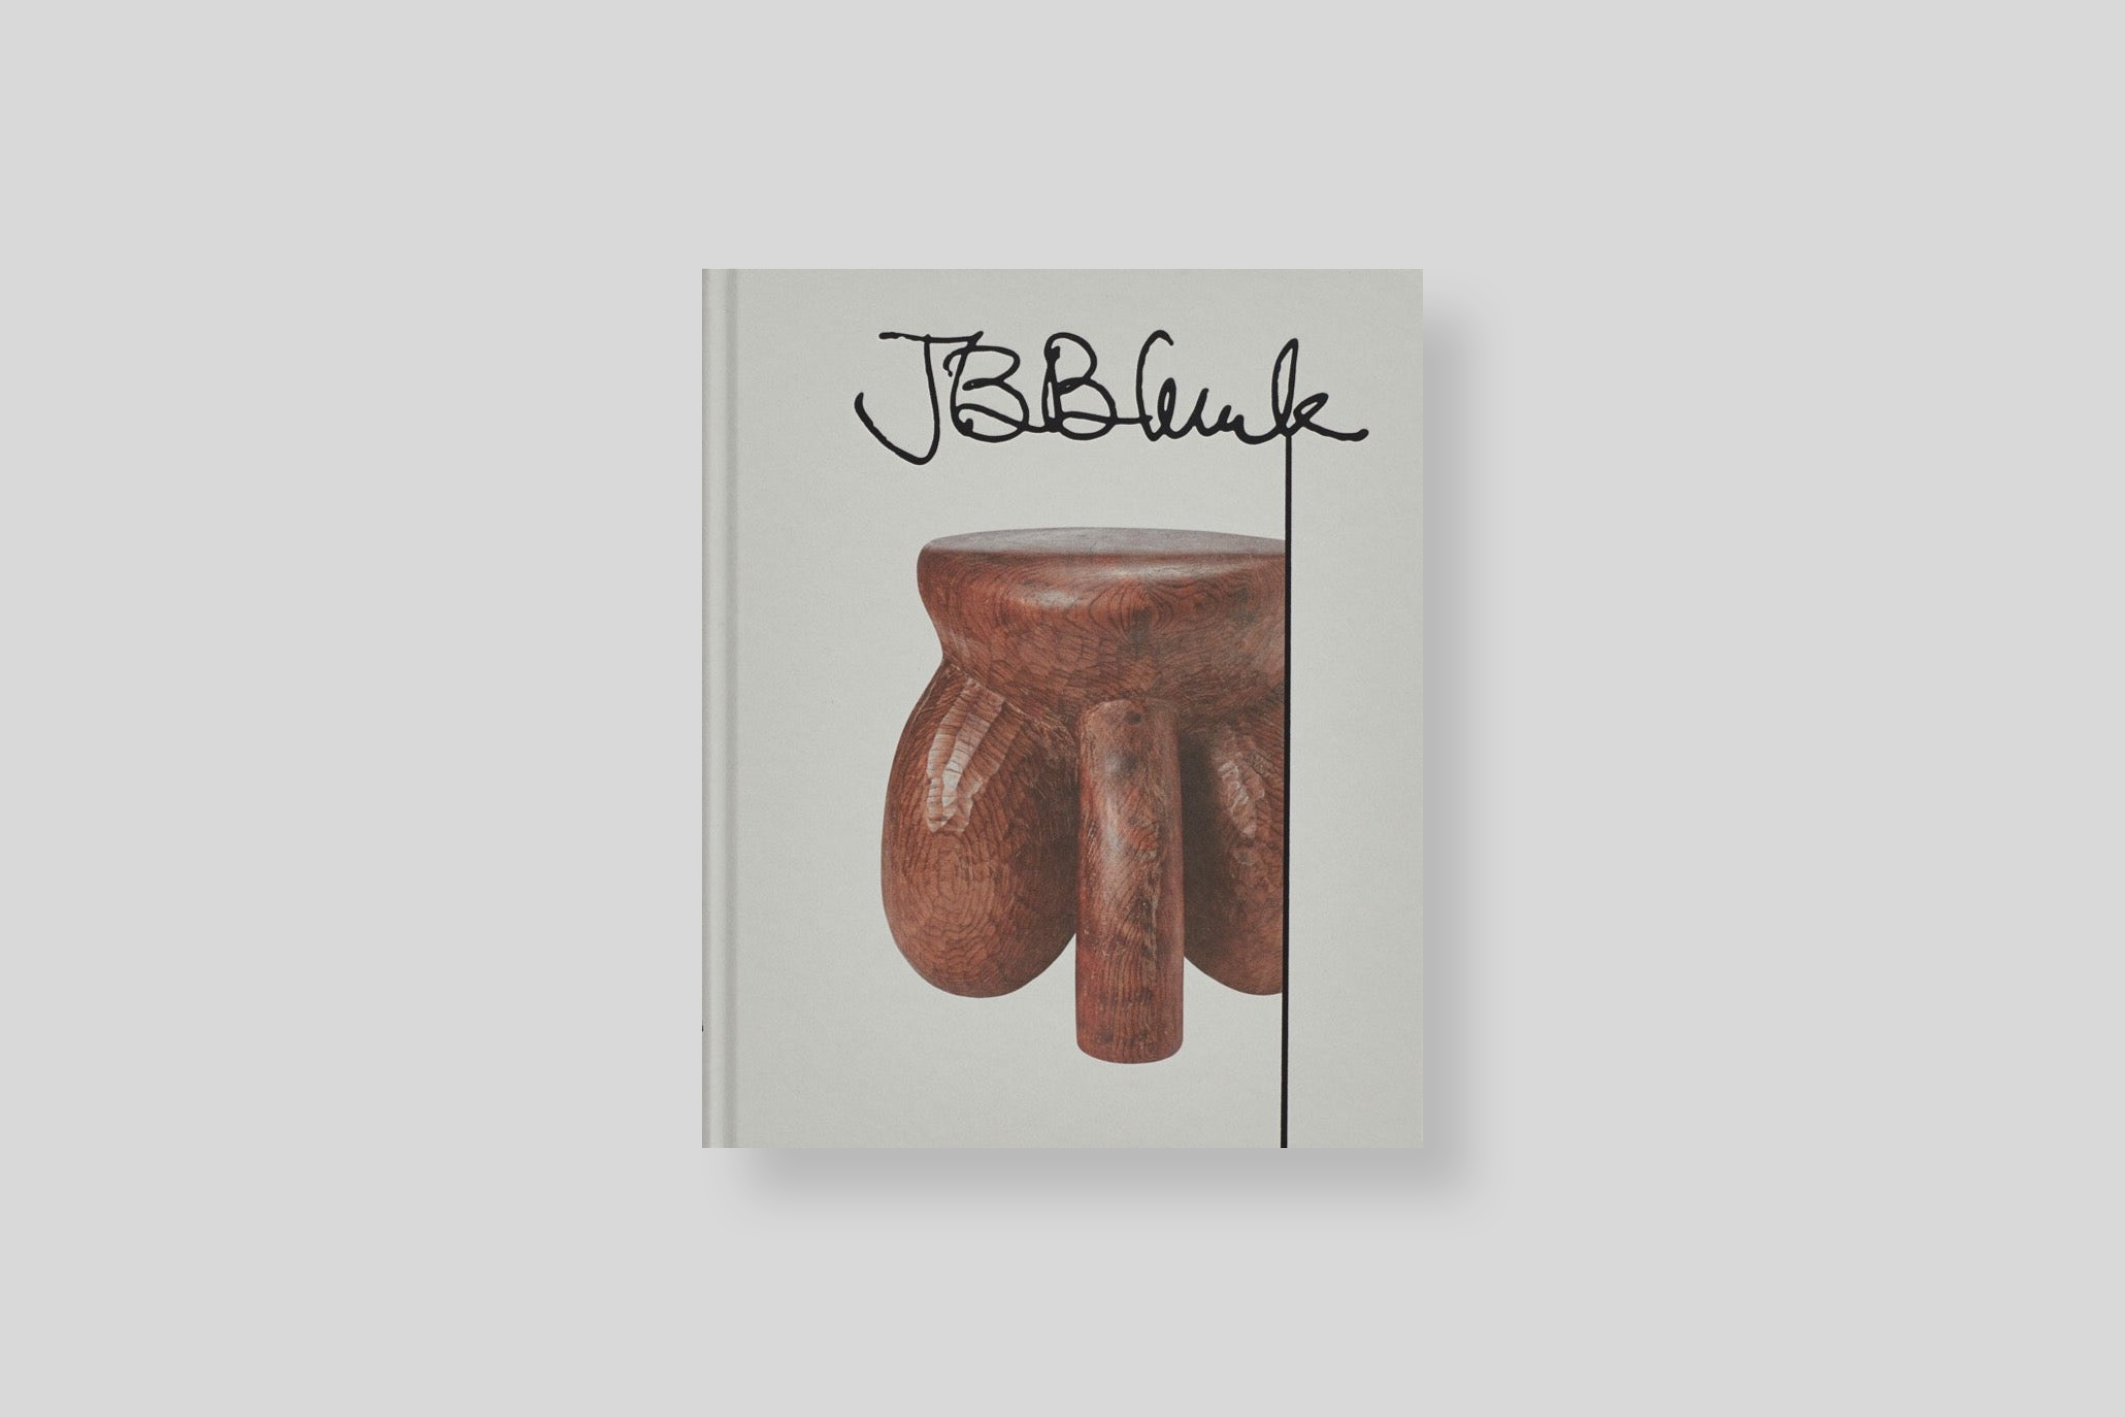 jb-blunk-third-edition-dent-de-leone-blunk-books-cover